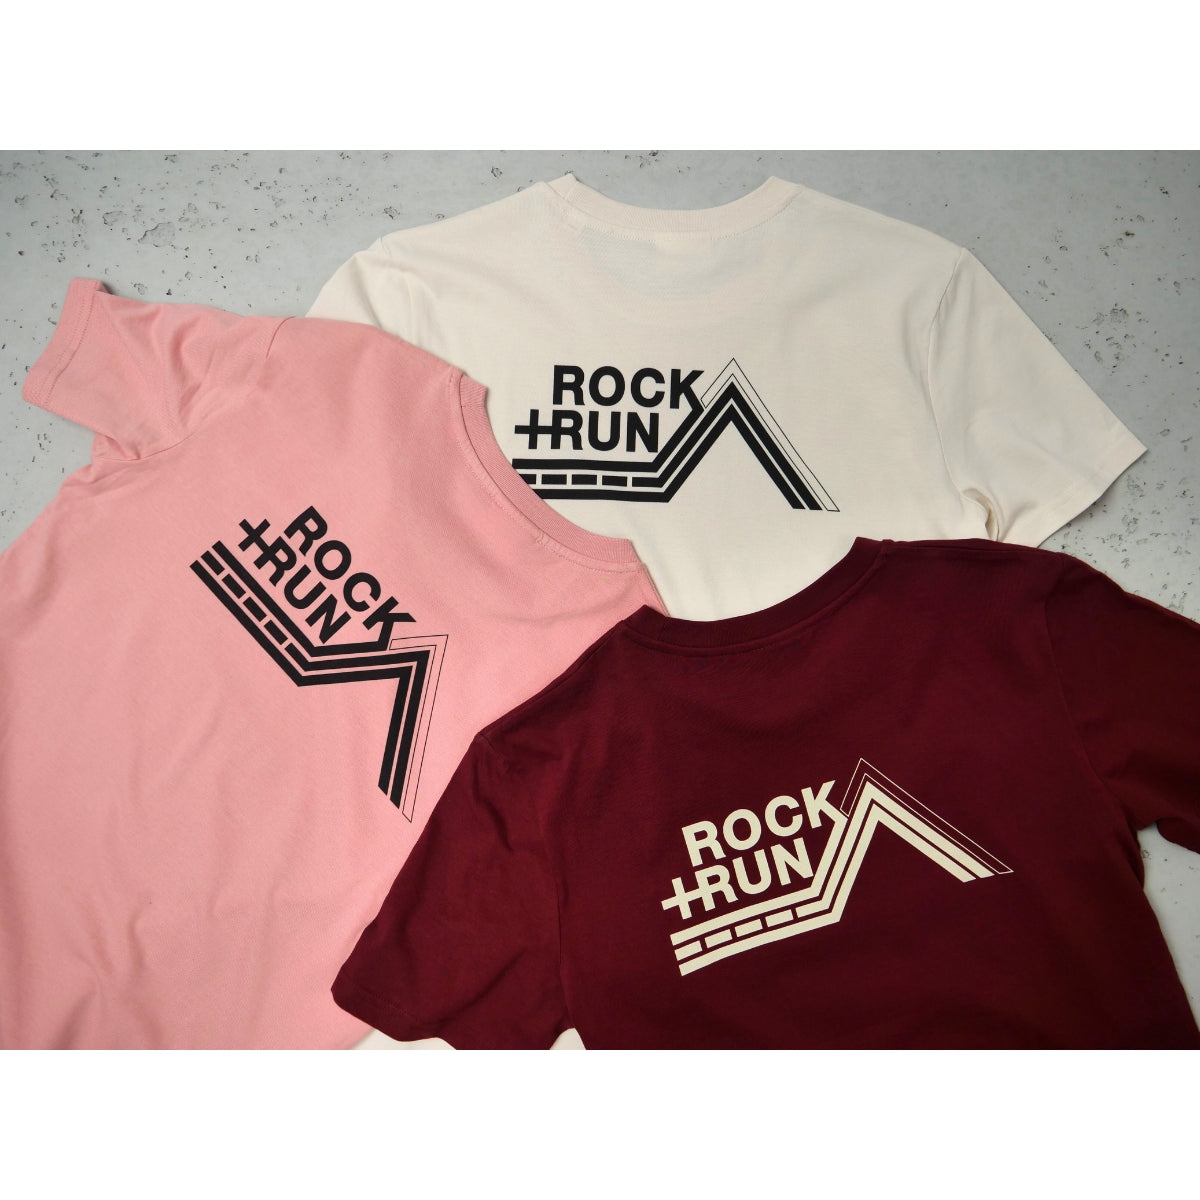 Rock+Run T-Shirt - Vintage White, Canyon Pink and Burgundy